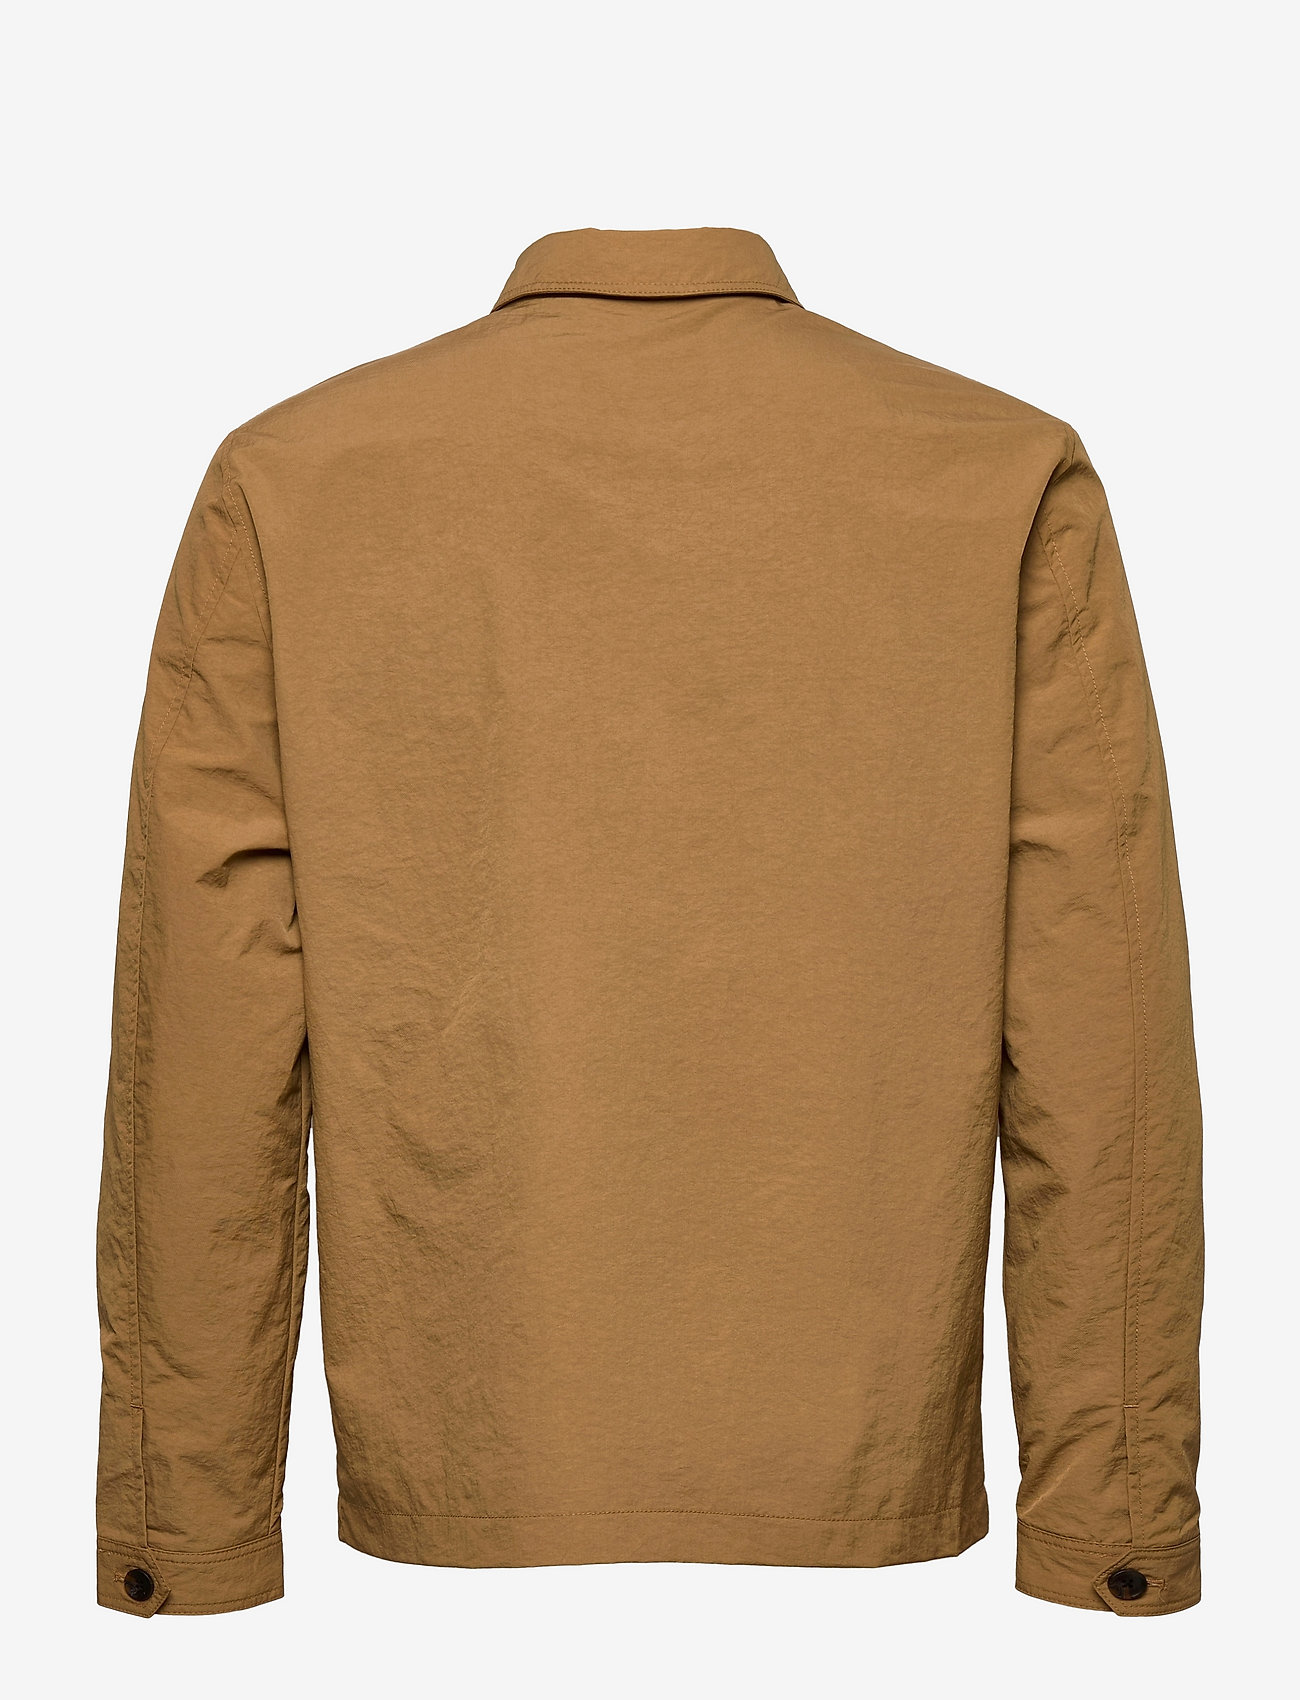 Esprit Casual - Recycled: safari jacket with mesh lining - mężczyźni - camel 2 - 1